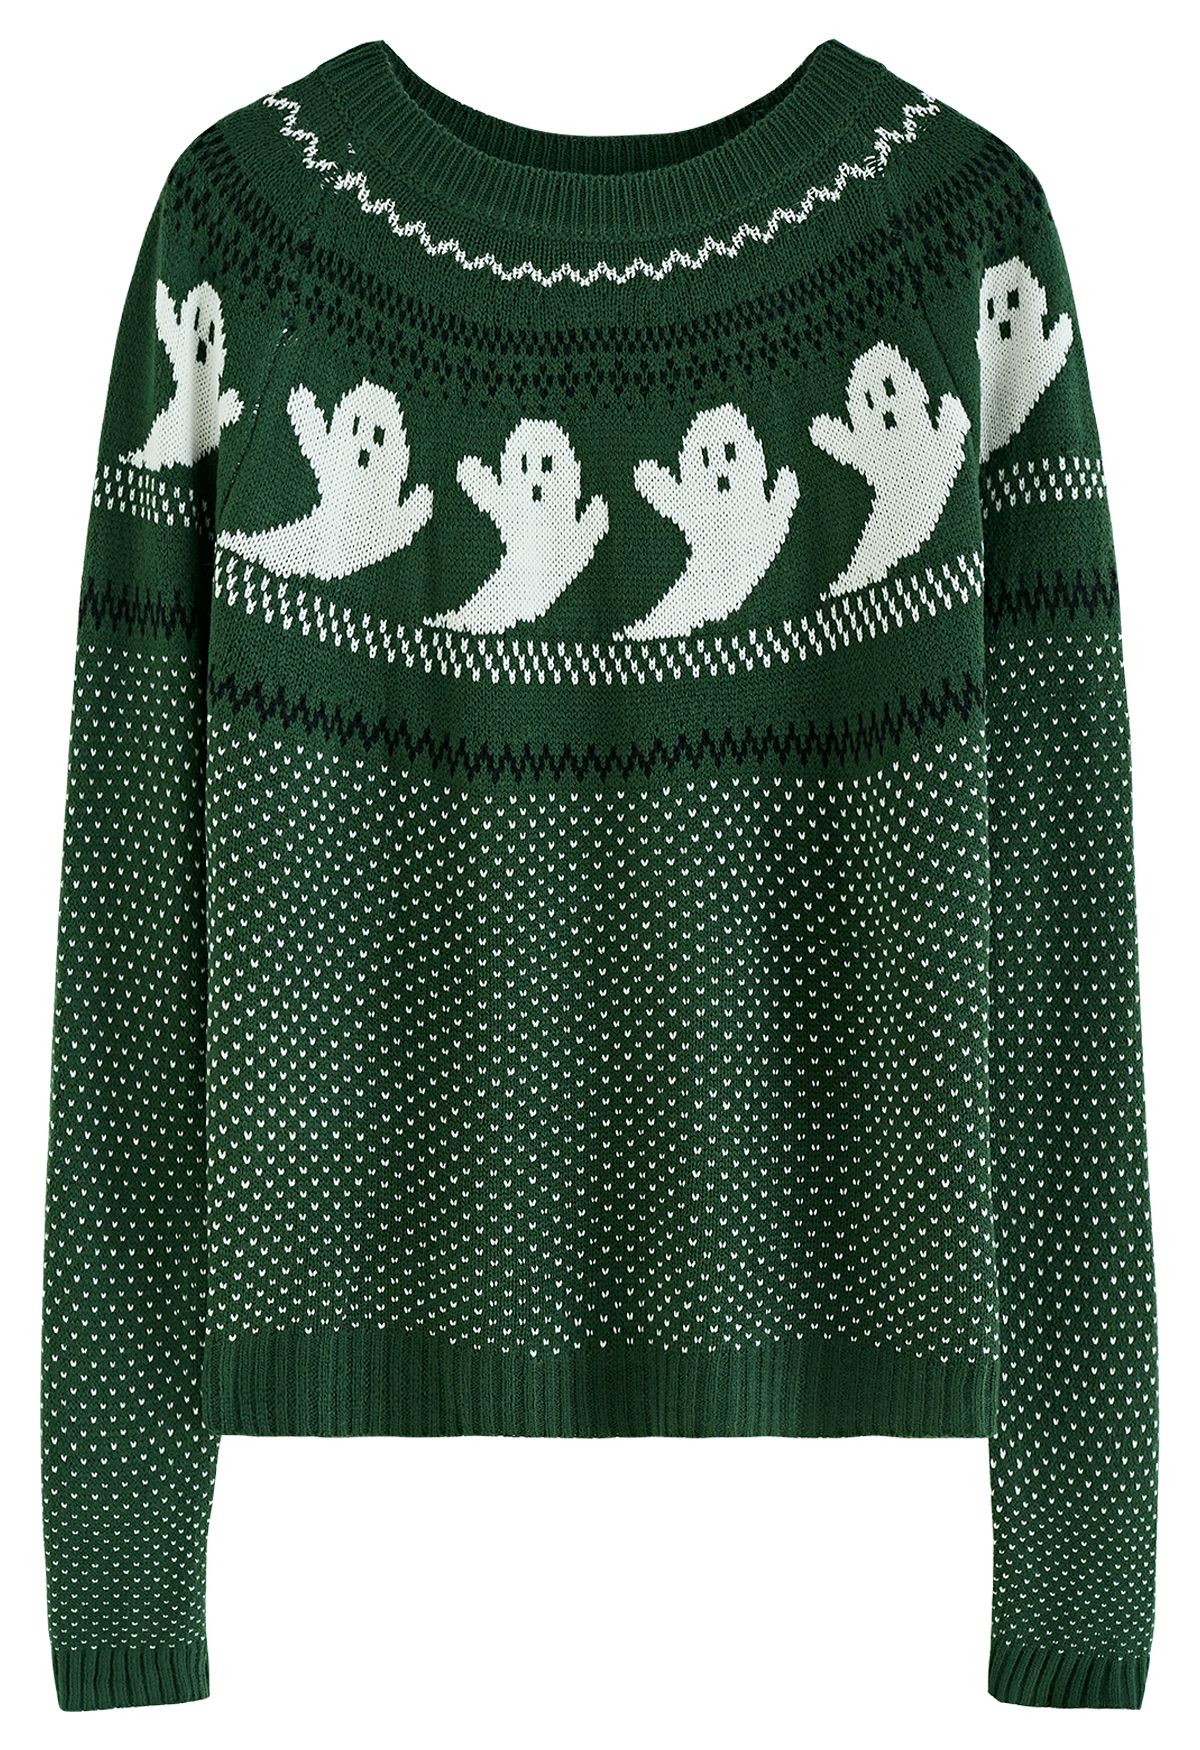 Suéter de punto de manga larga fantasma lindo en verde militar